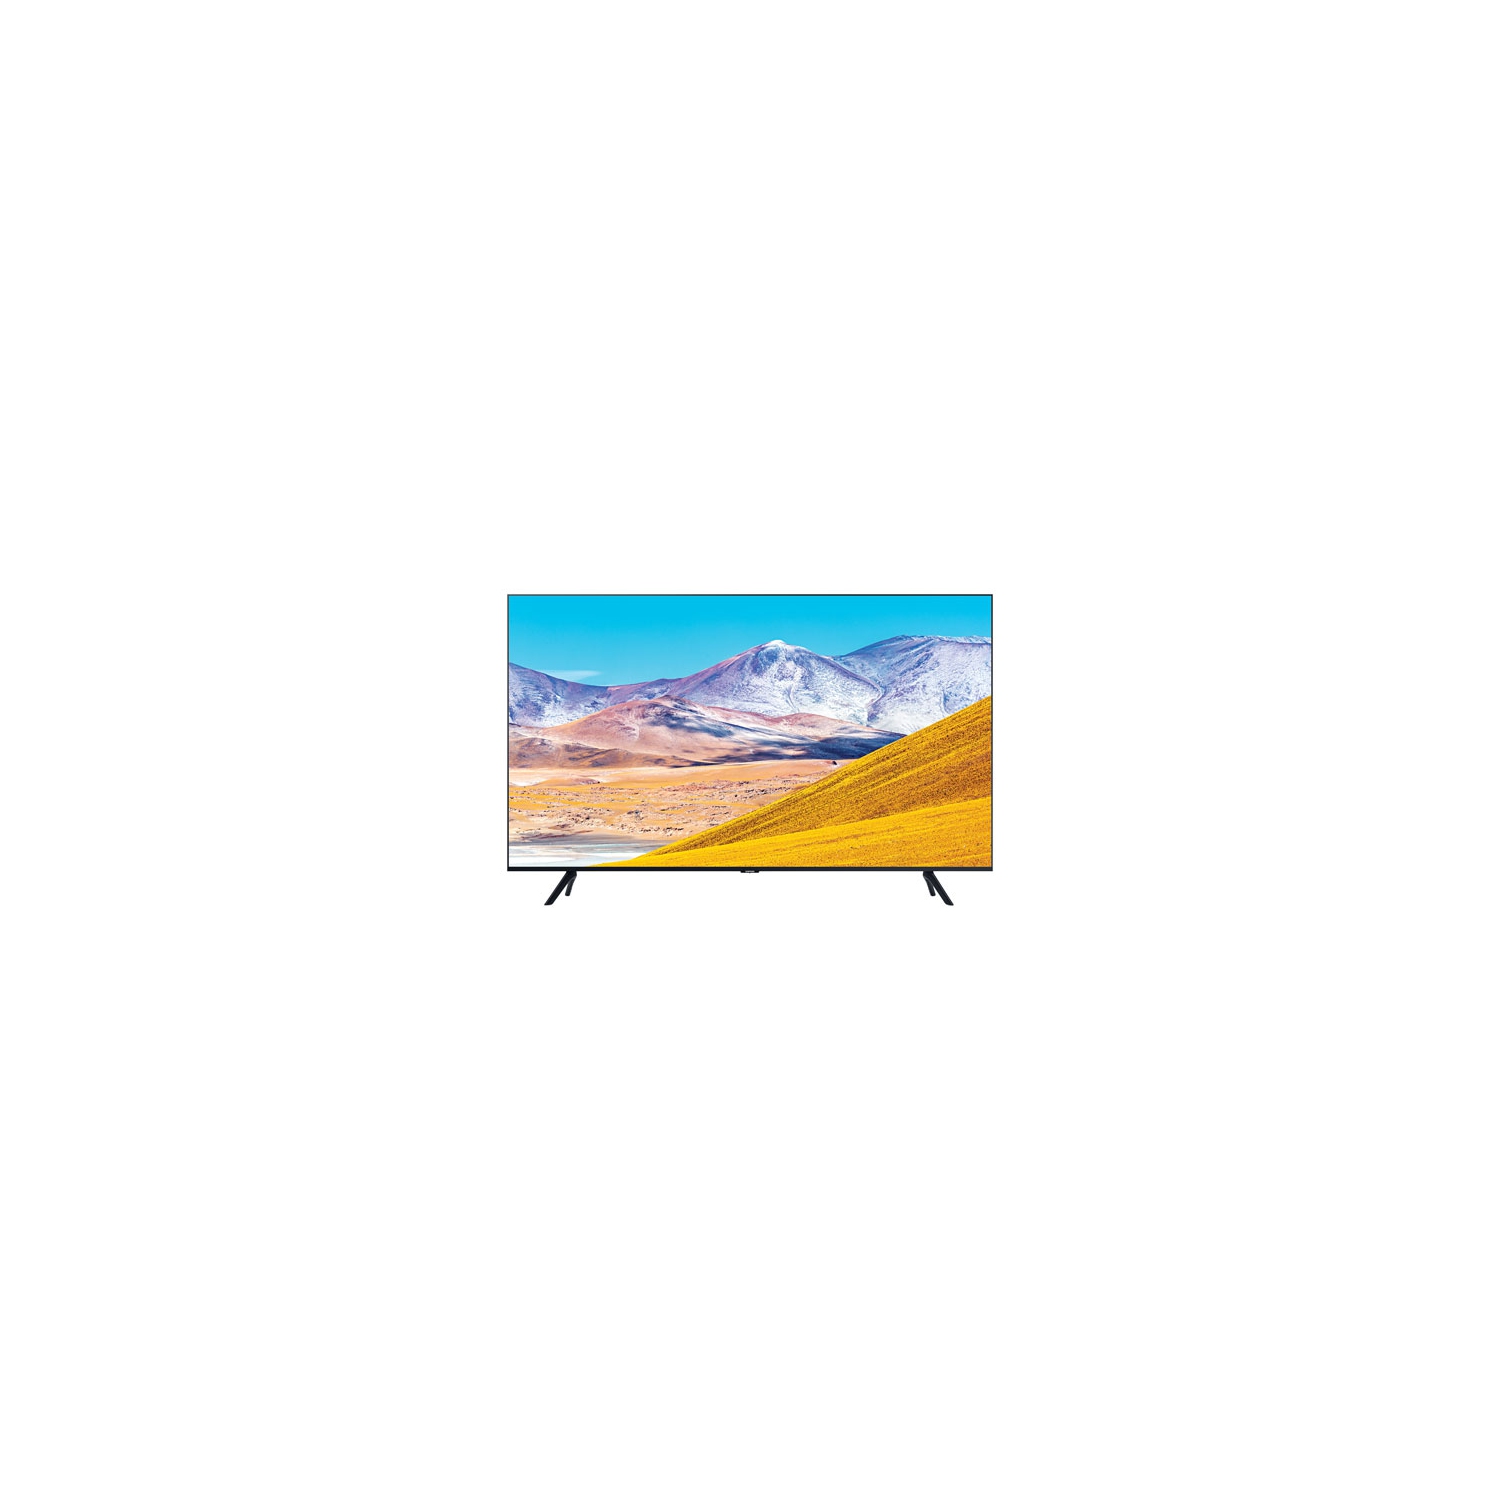 Samsung 50" 4K UHD HDR LED Tizen Smart TV (UN50TU8000FXZC) - Open Box